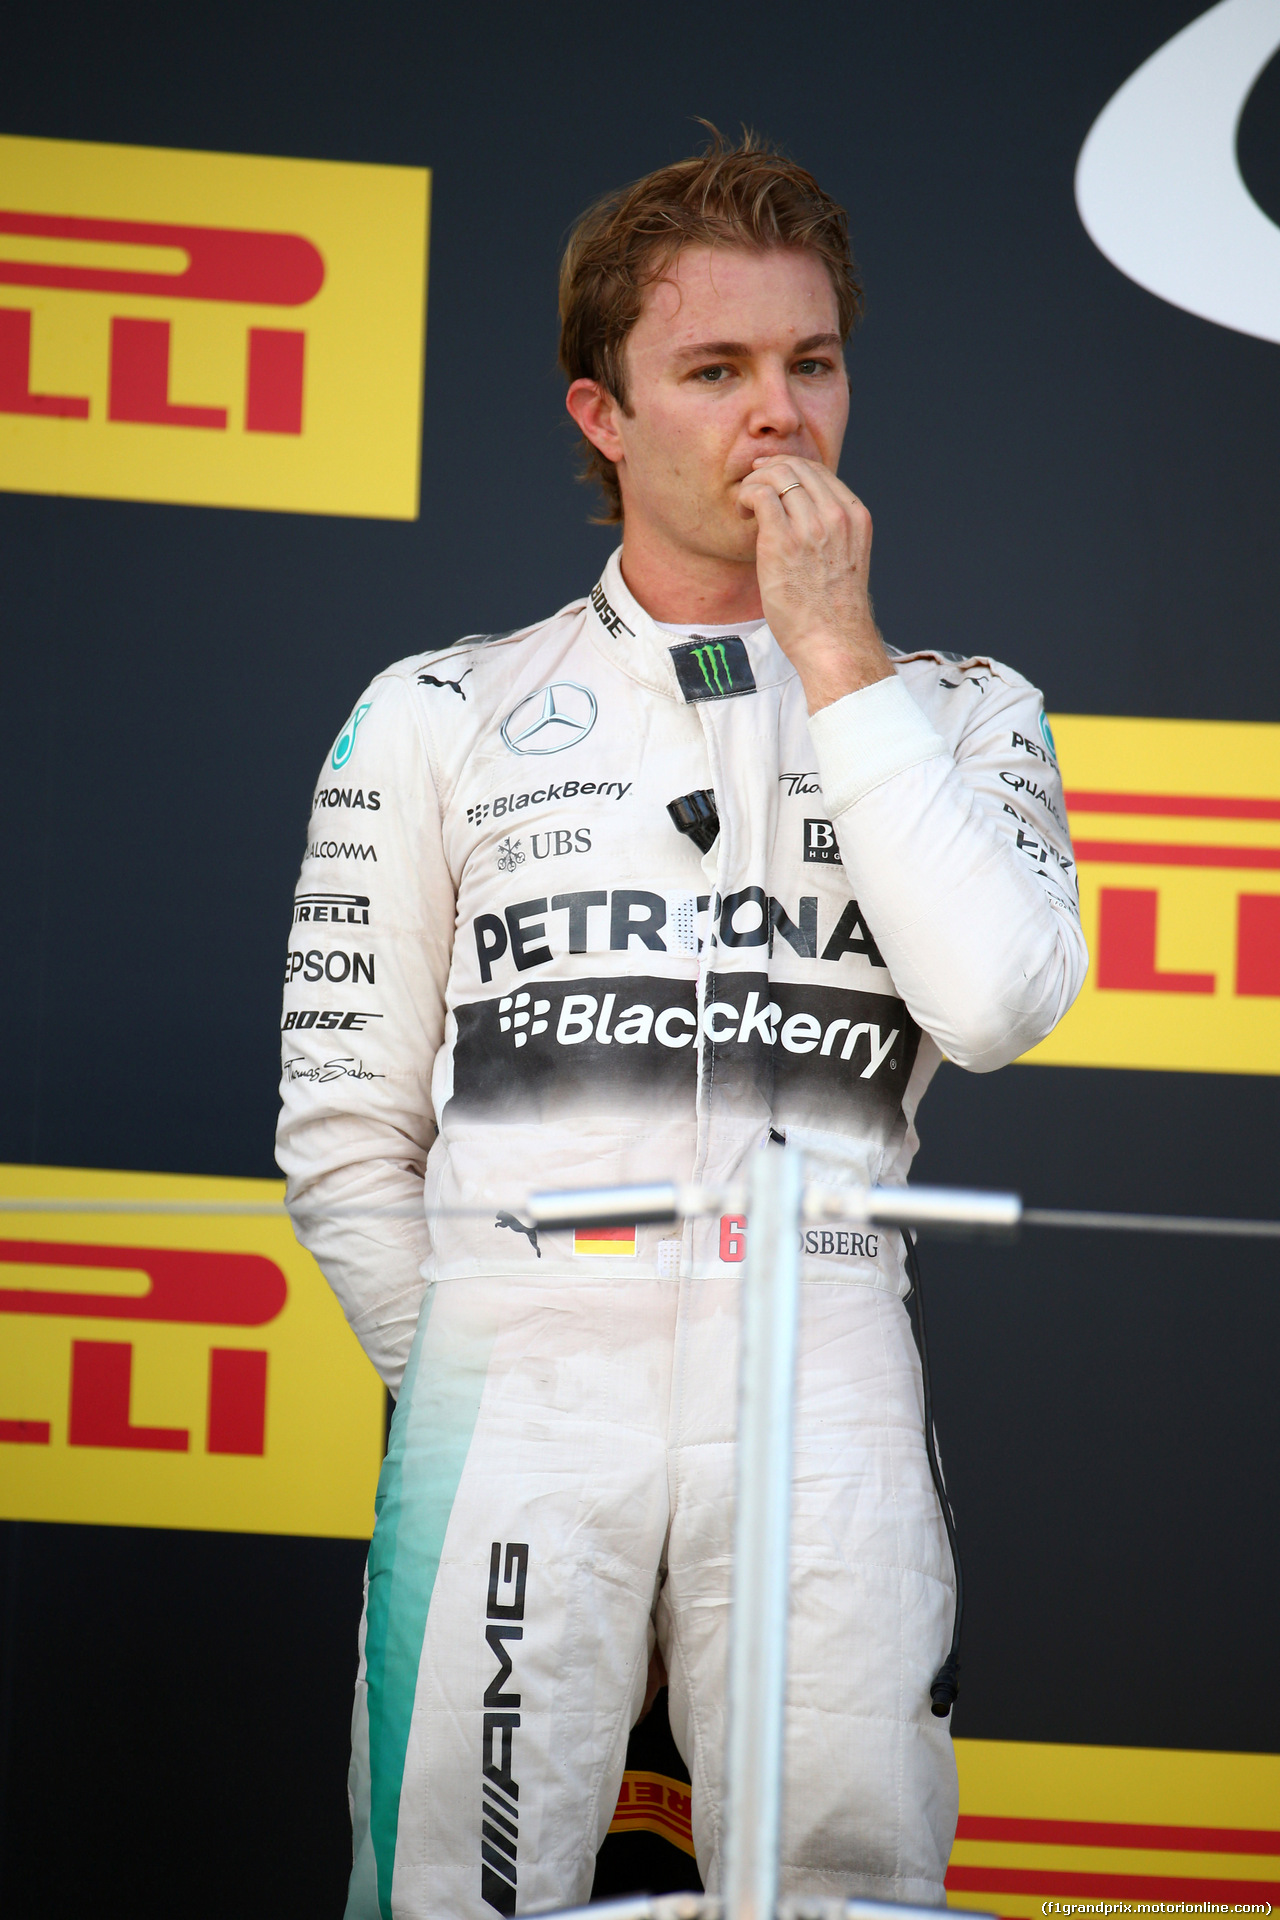 GP GIAPPONE, 27.09.2015 - Gara, secondo Nico Rosberg (GER) Mercedes AMG F1 W06